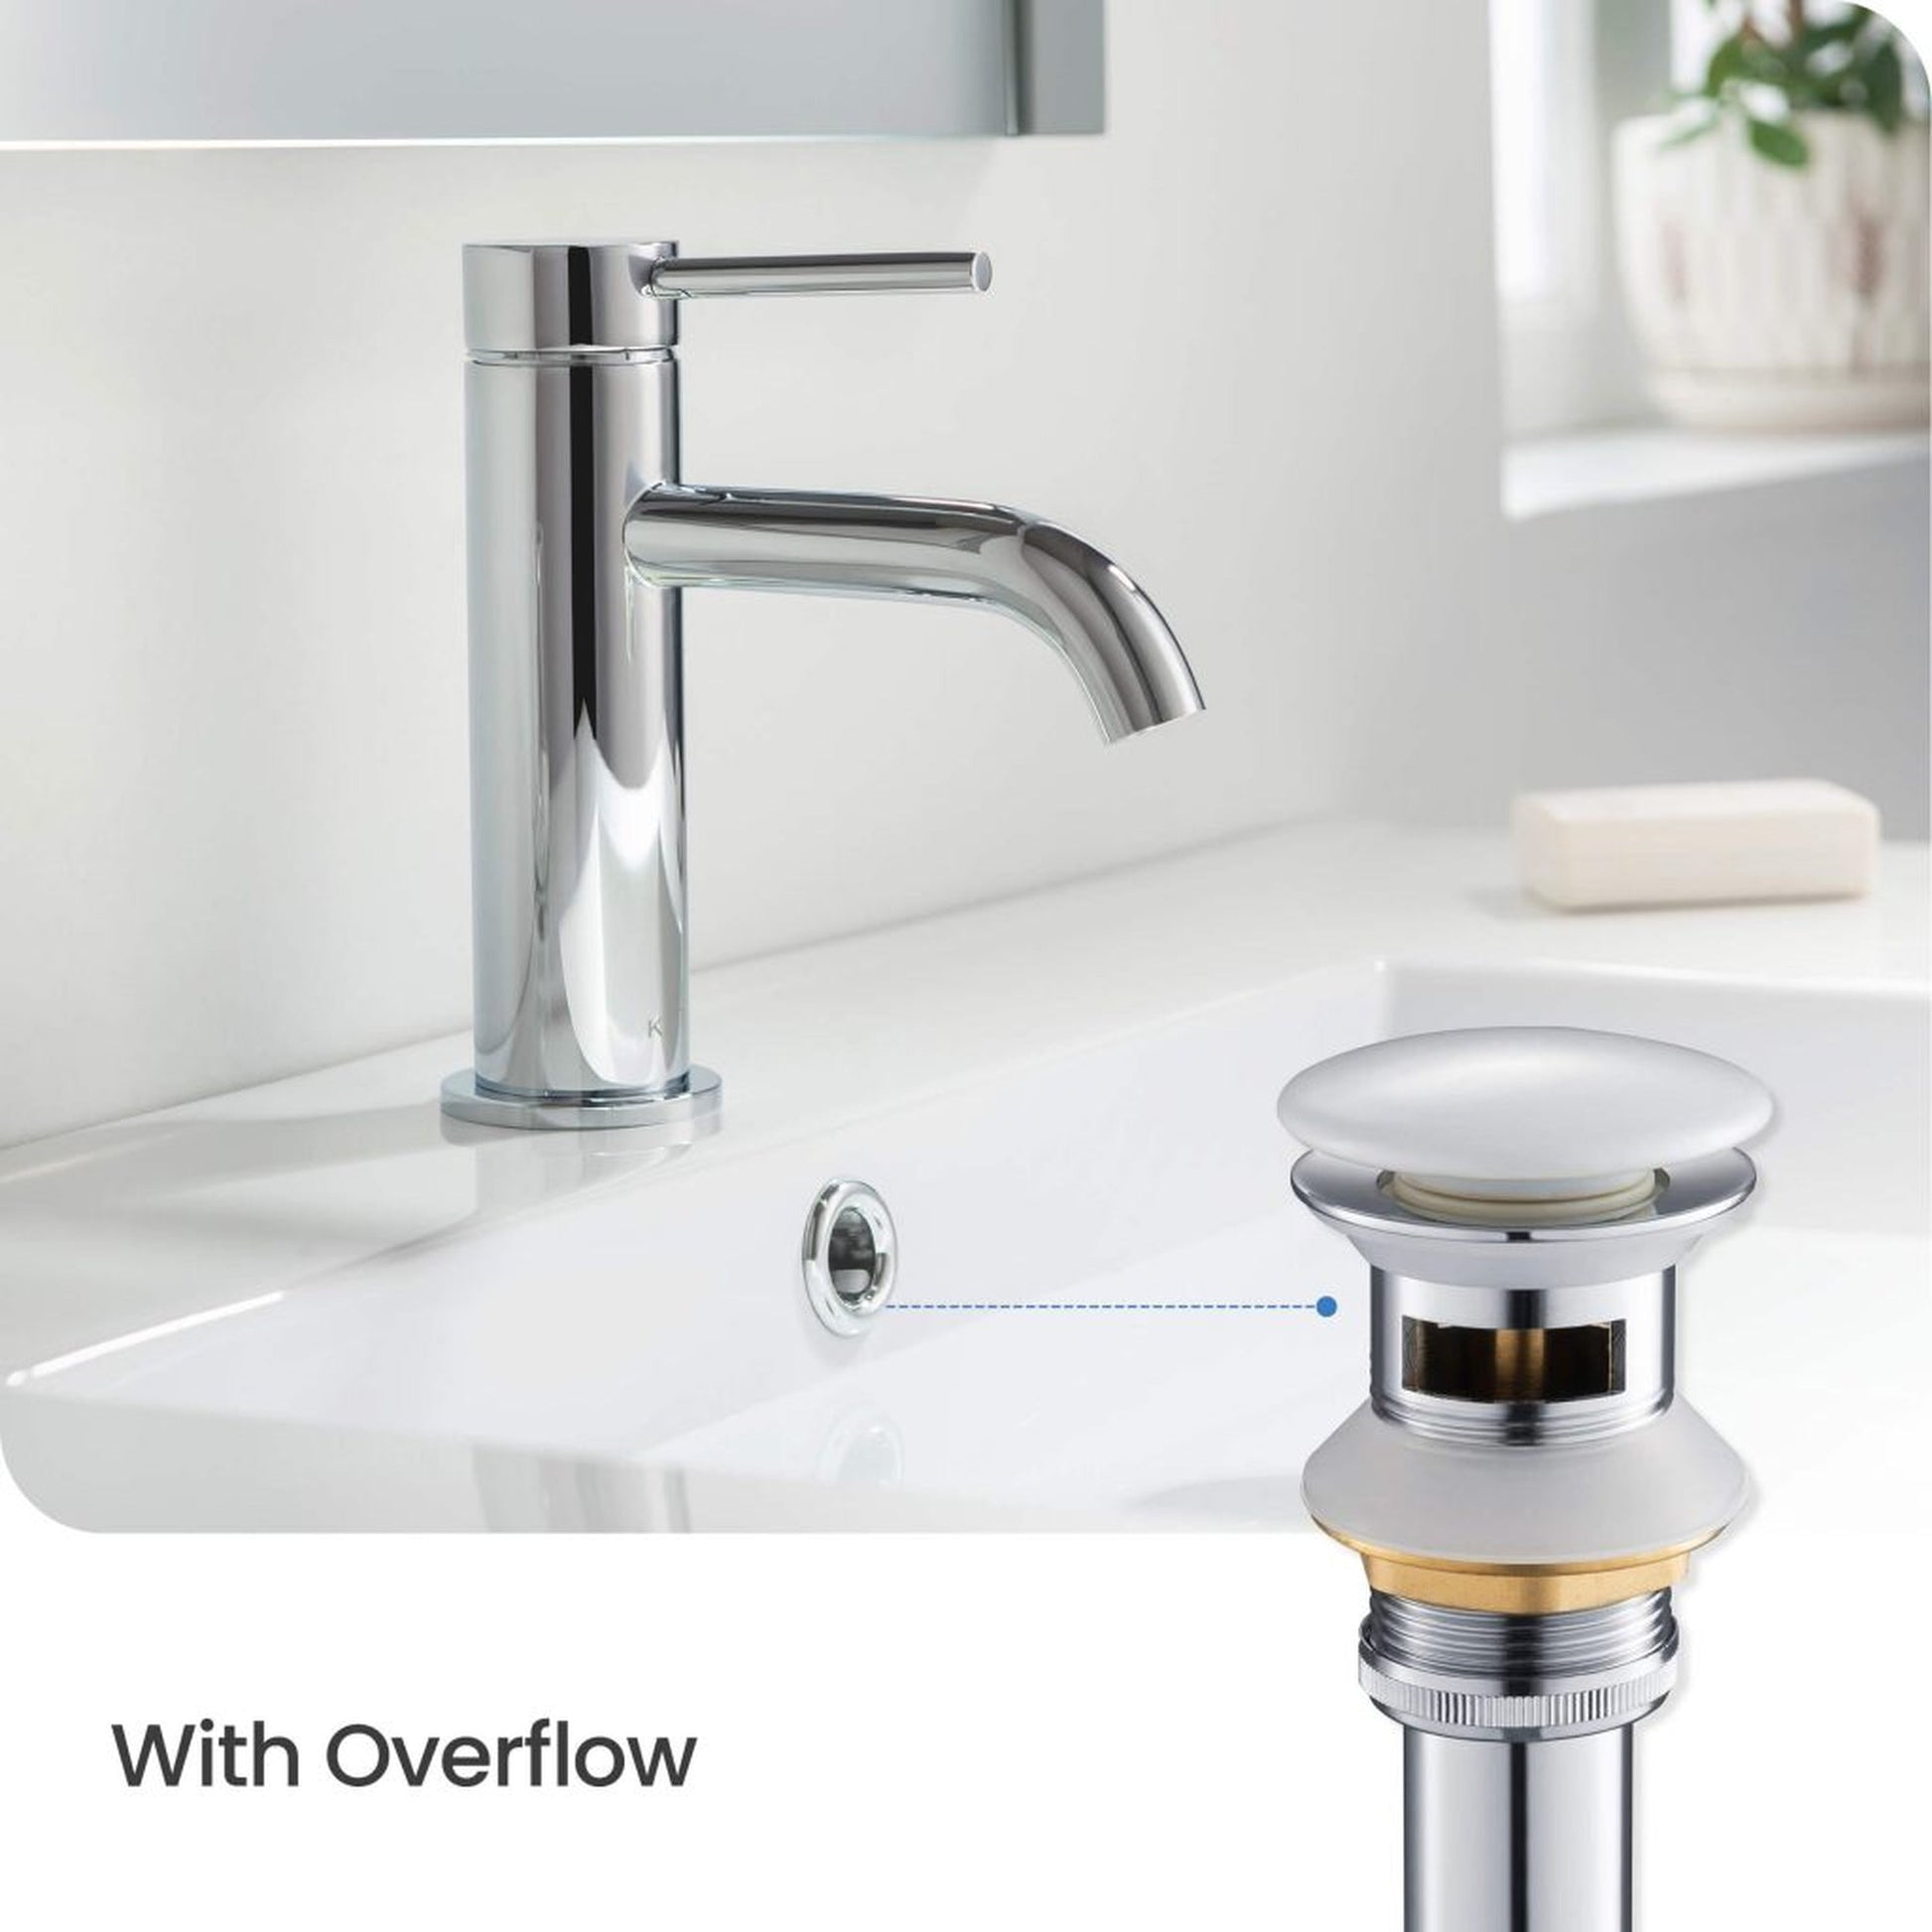 KIBI Brass Bathroom Sink Pop-Up Drain Stopper Full Cover With Overflow in Chrome Finish